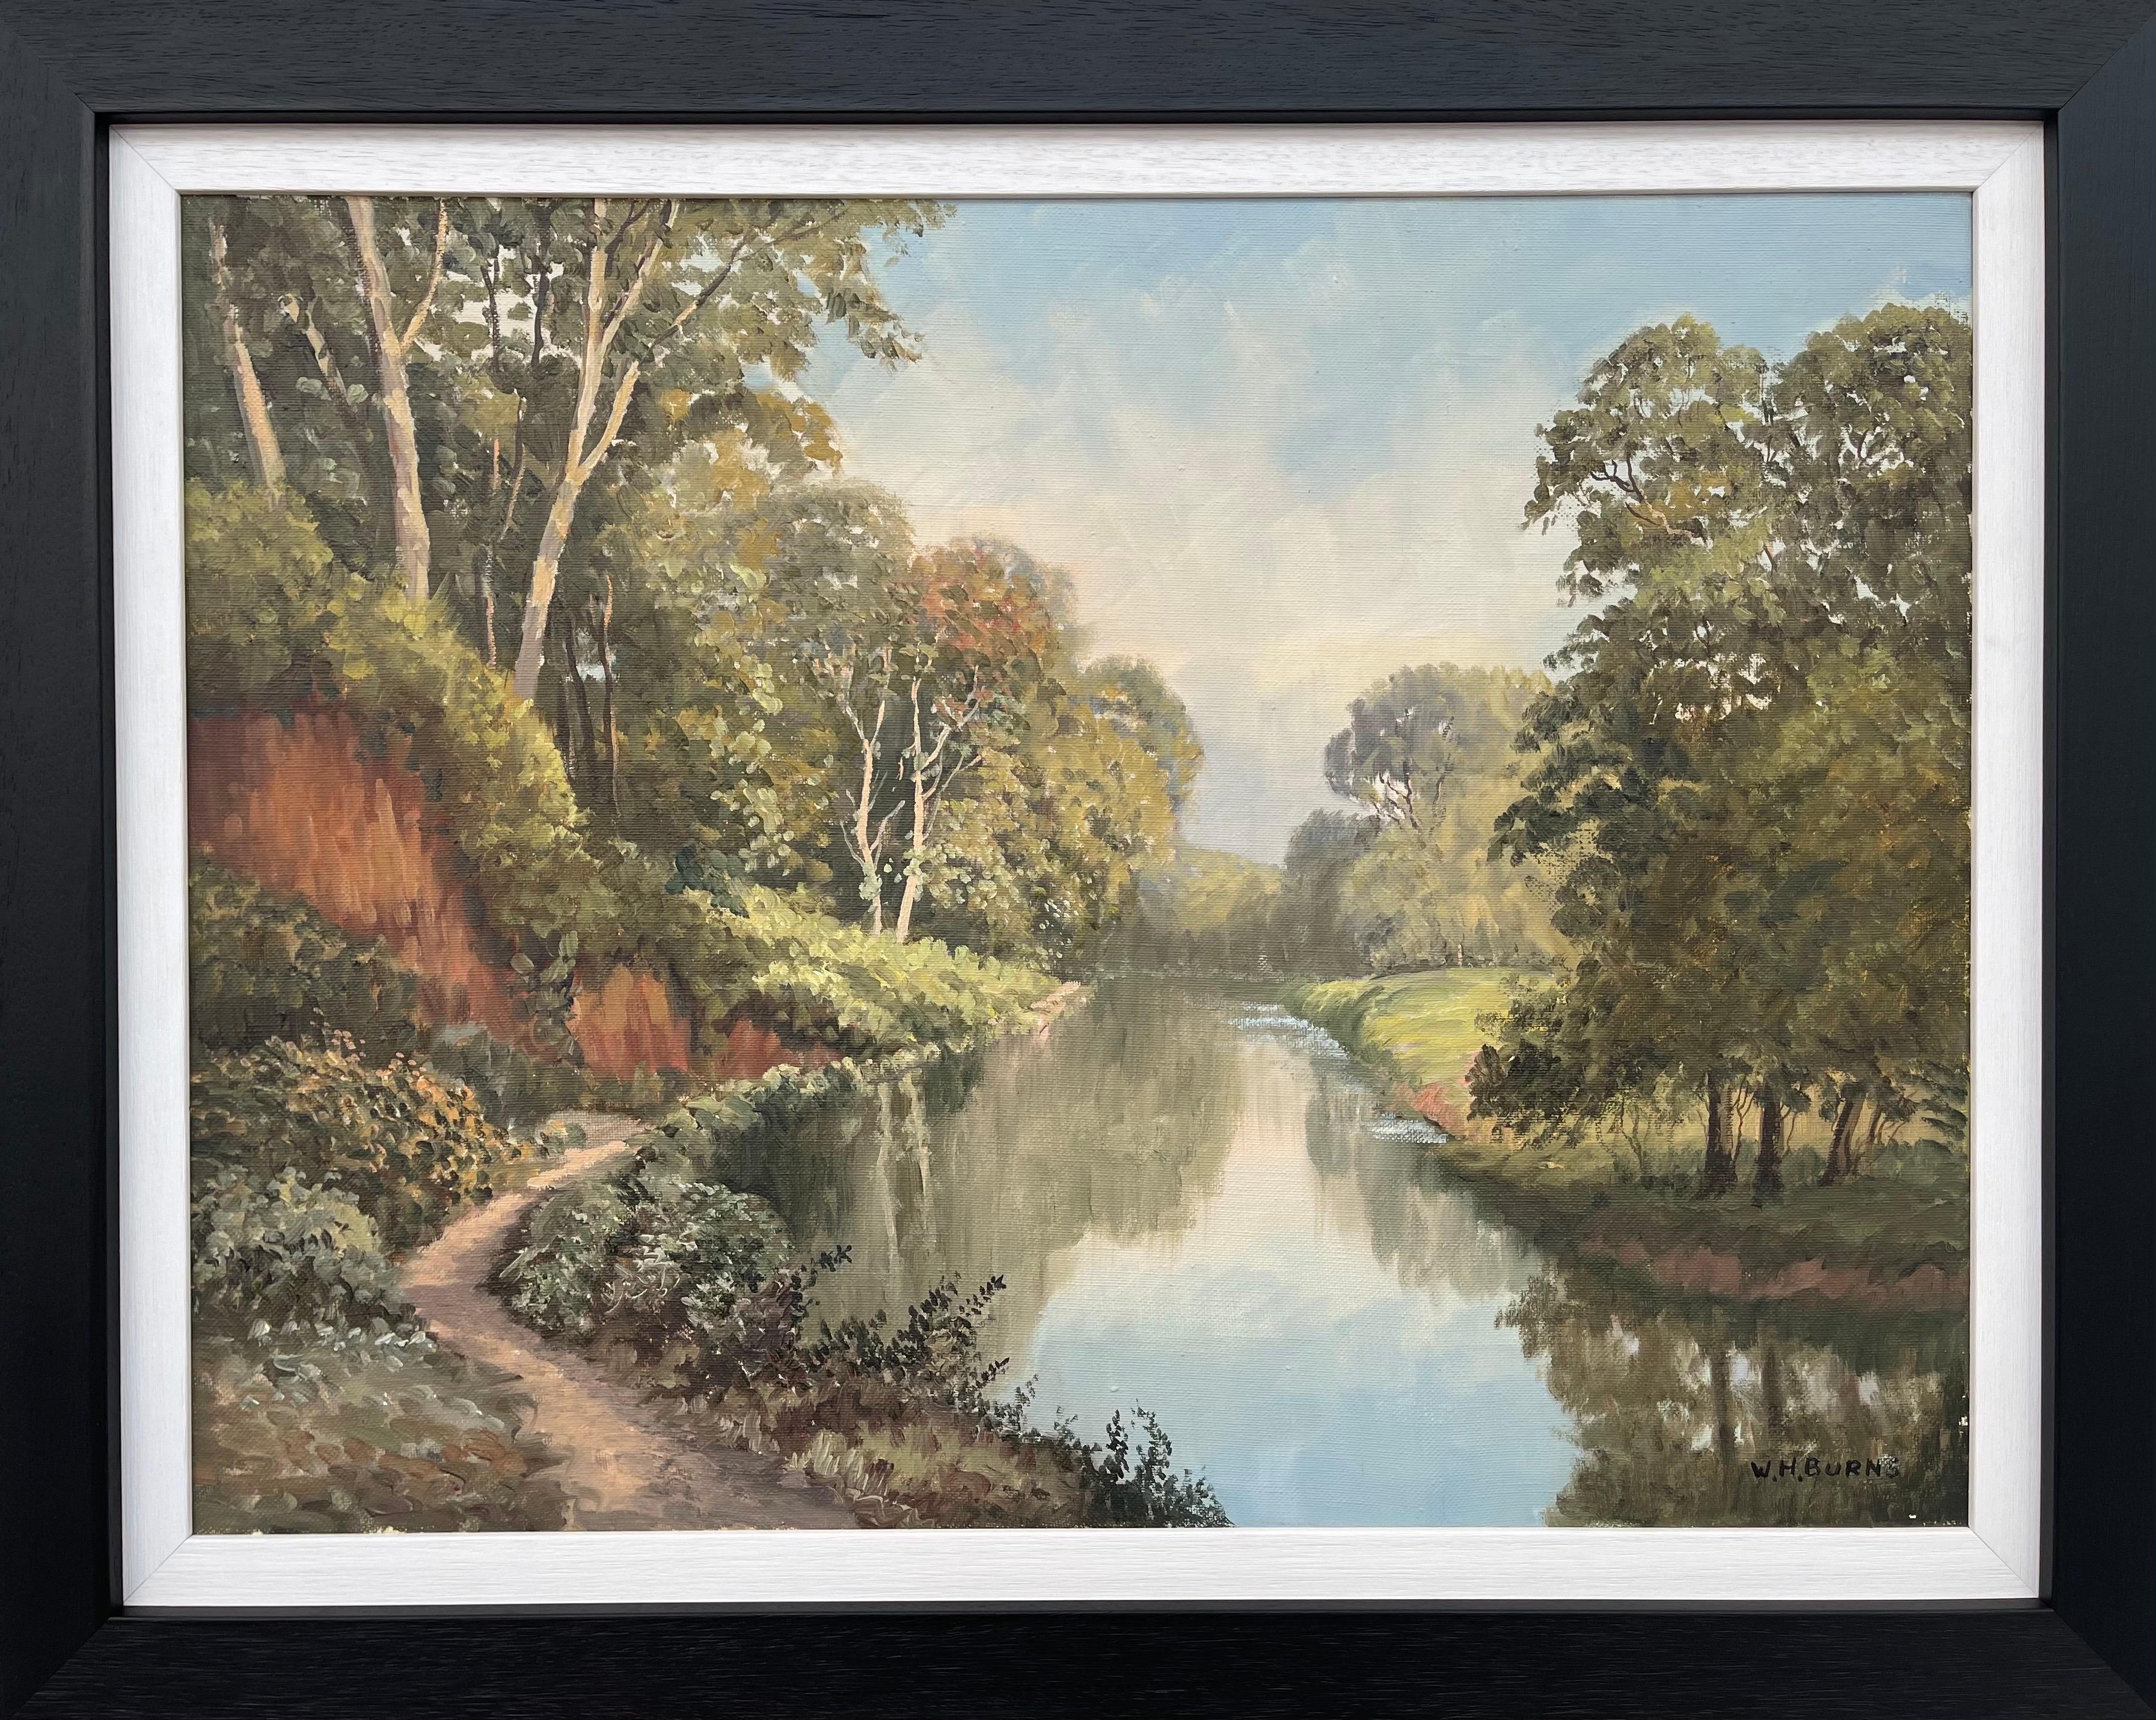 Painting of Idyllic River Scene On the Lagan in Ireland by Modern Irish Artist 